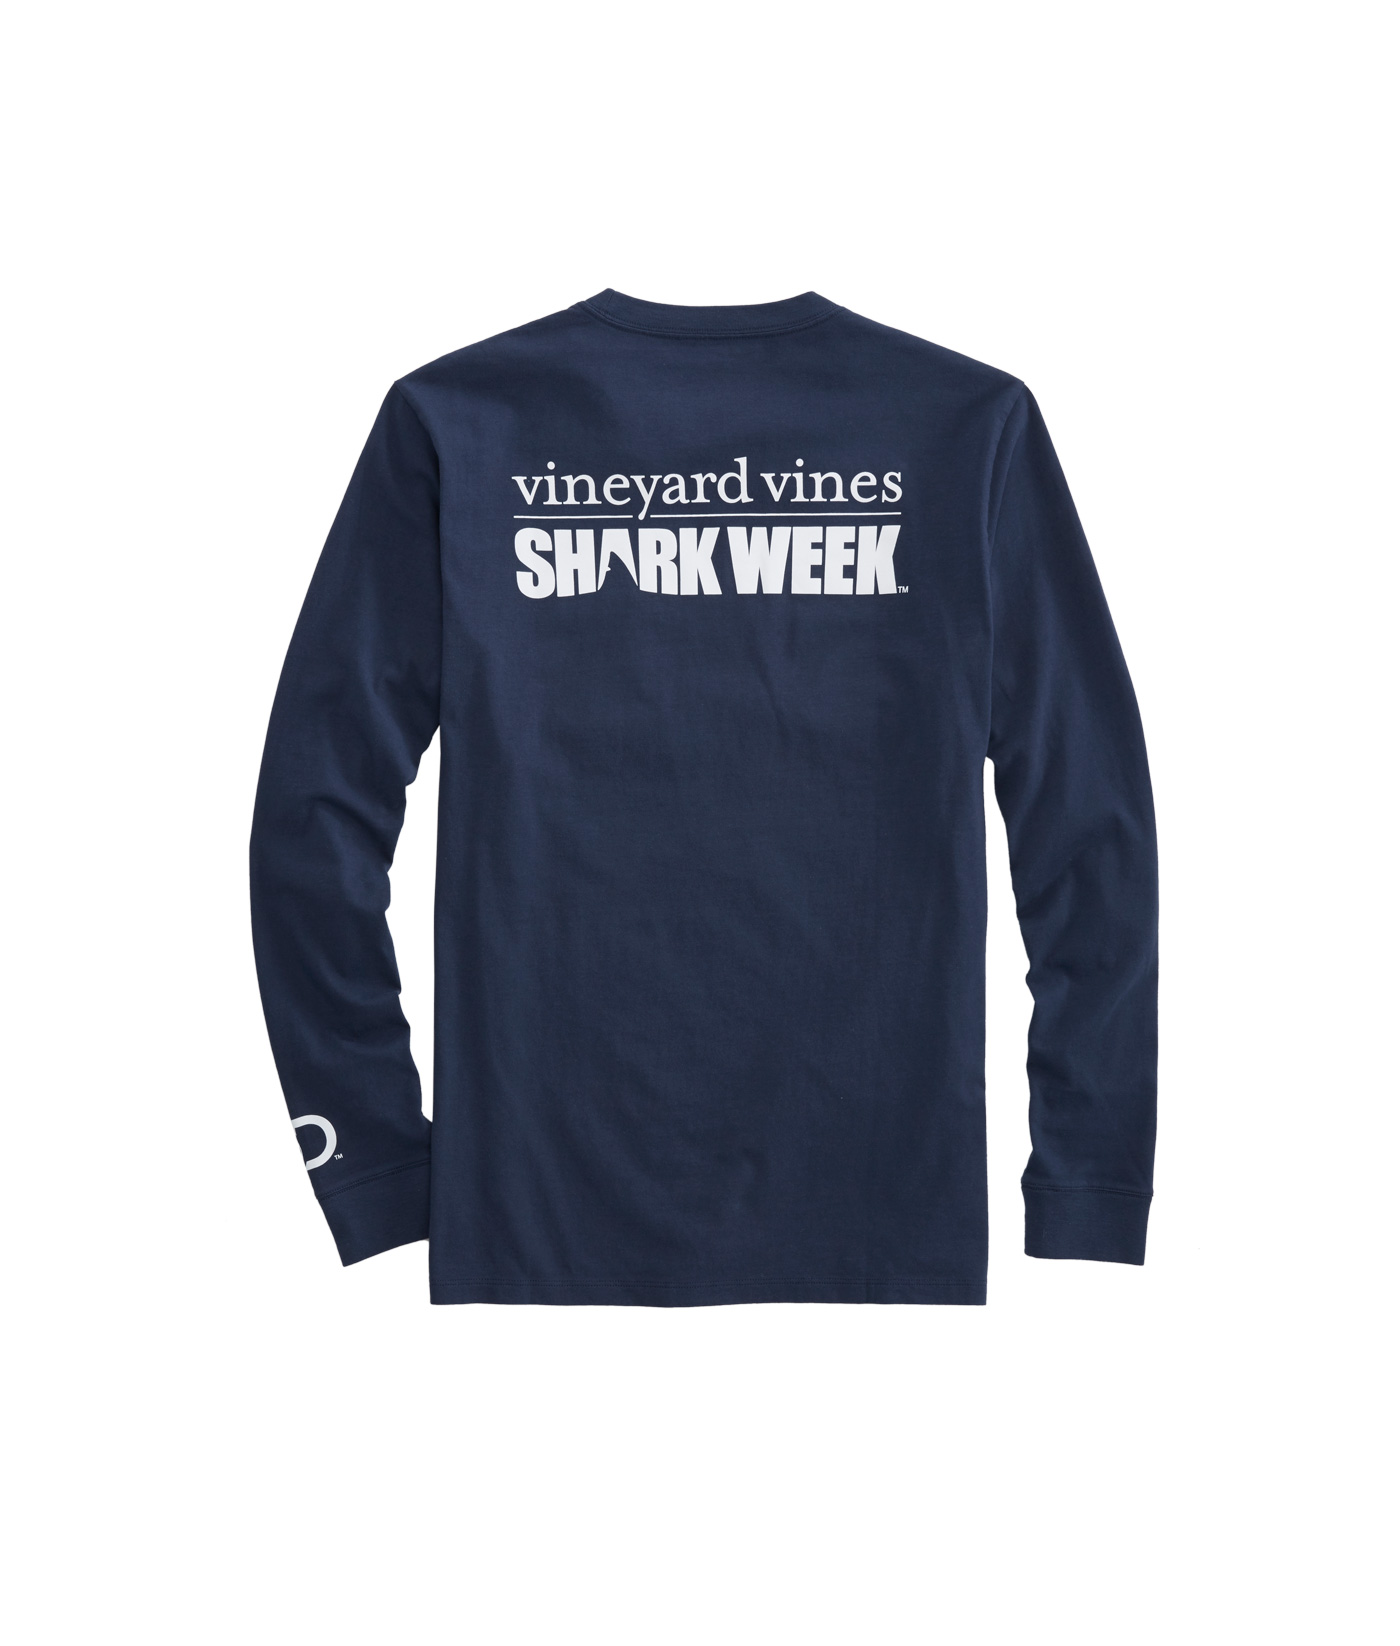 Shop Mens Shark Week Long-Sleeve Logo T-Shirt at vineyard vines